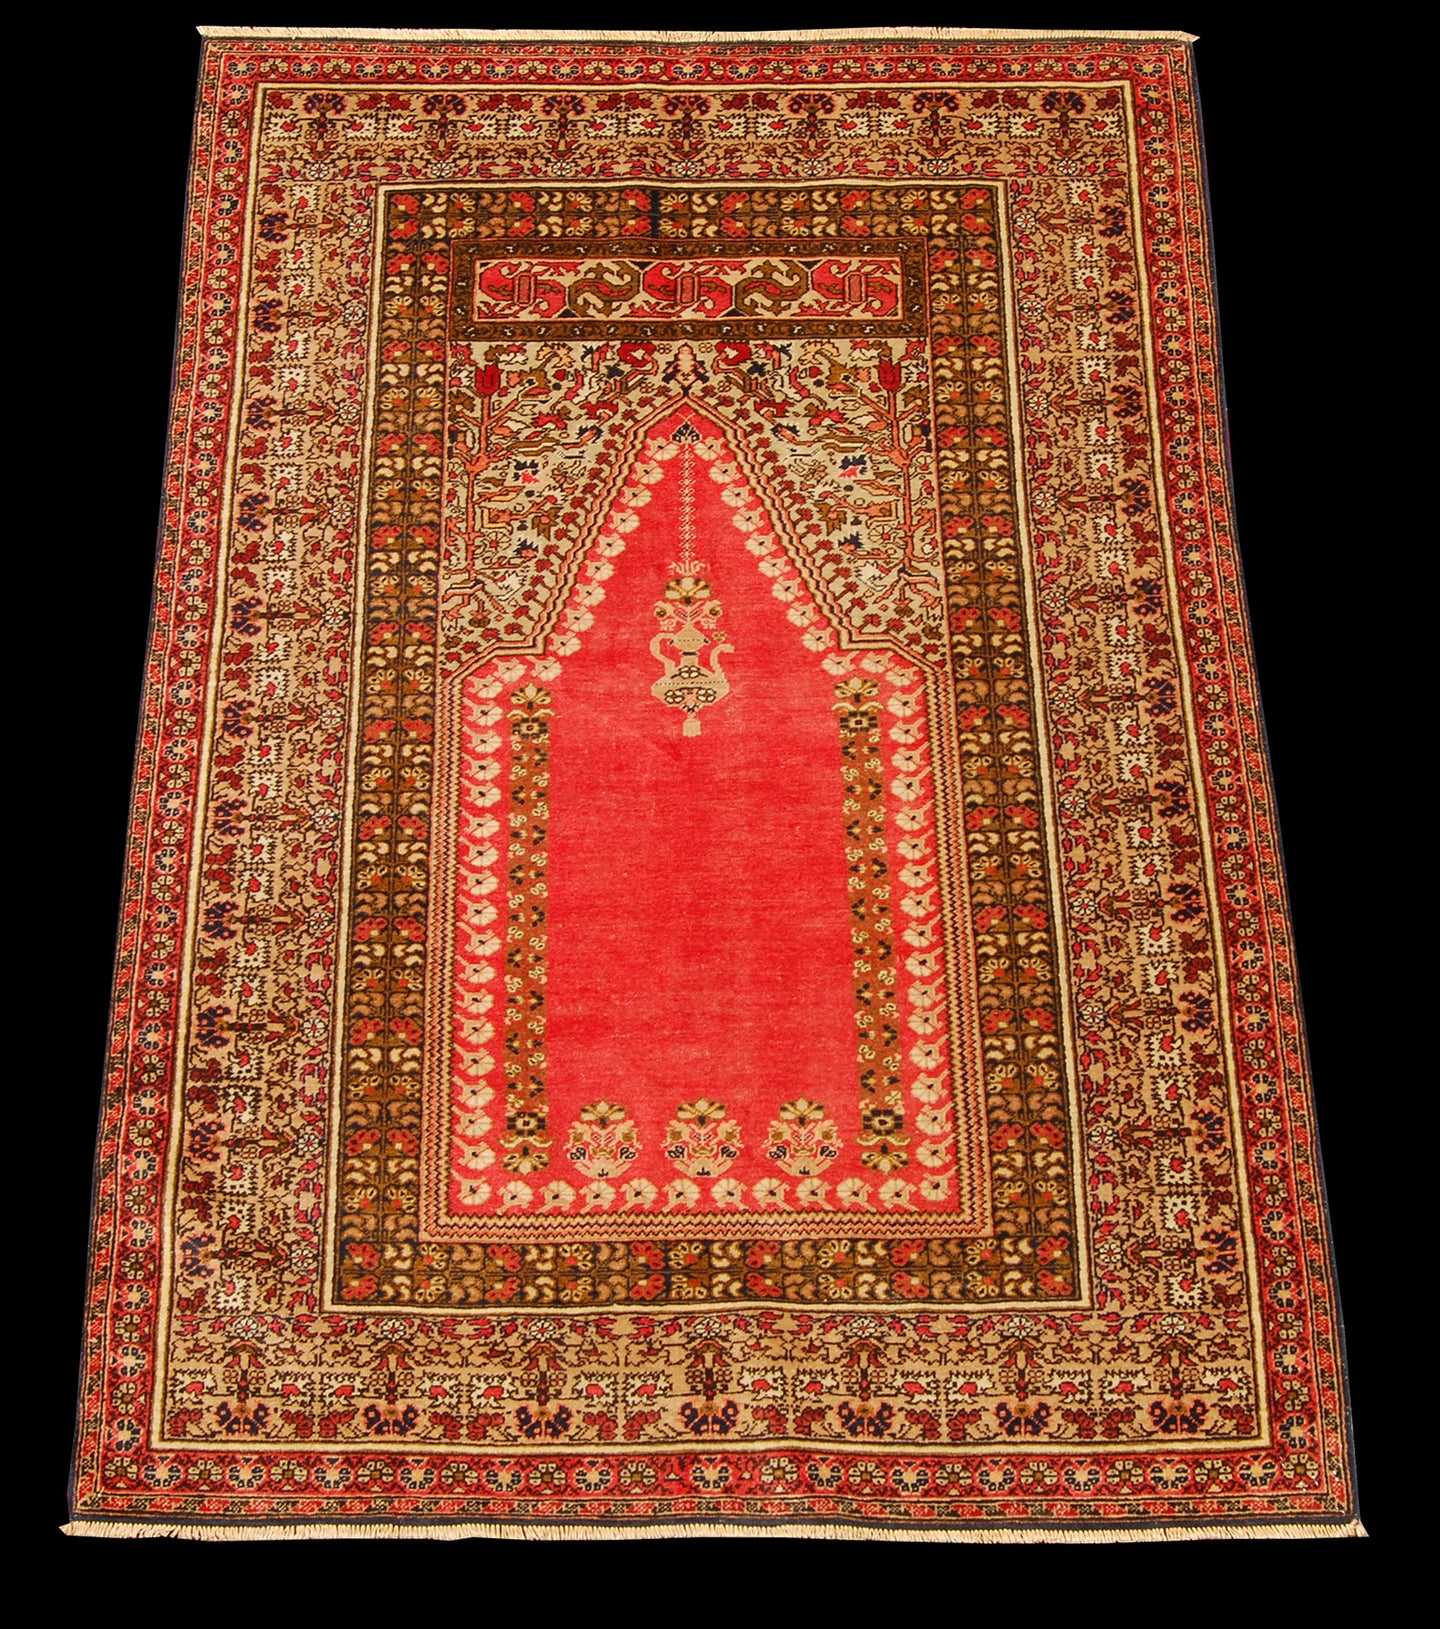 Panderma Tappeto Carpet Tapis Teppich Alfombra Rug Tapiet 170x115 CM